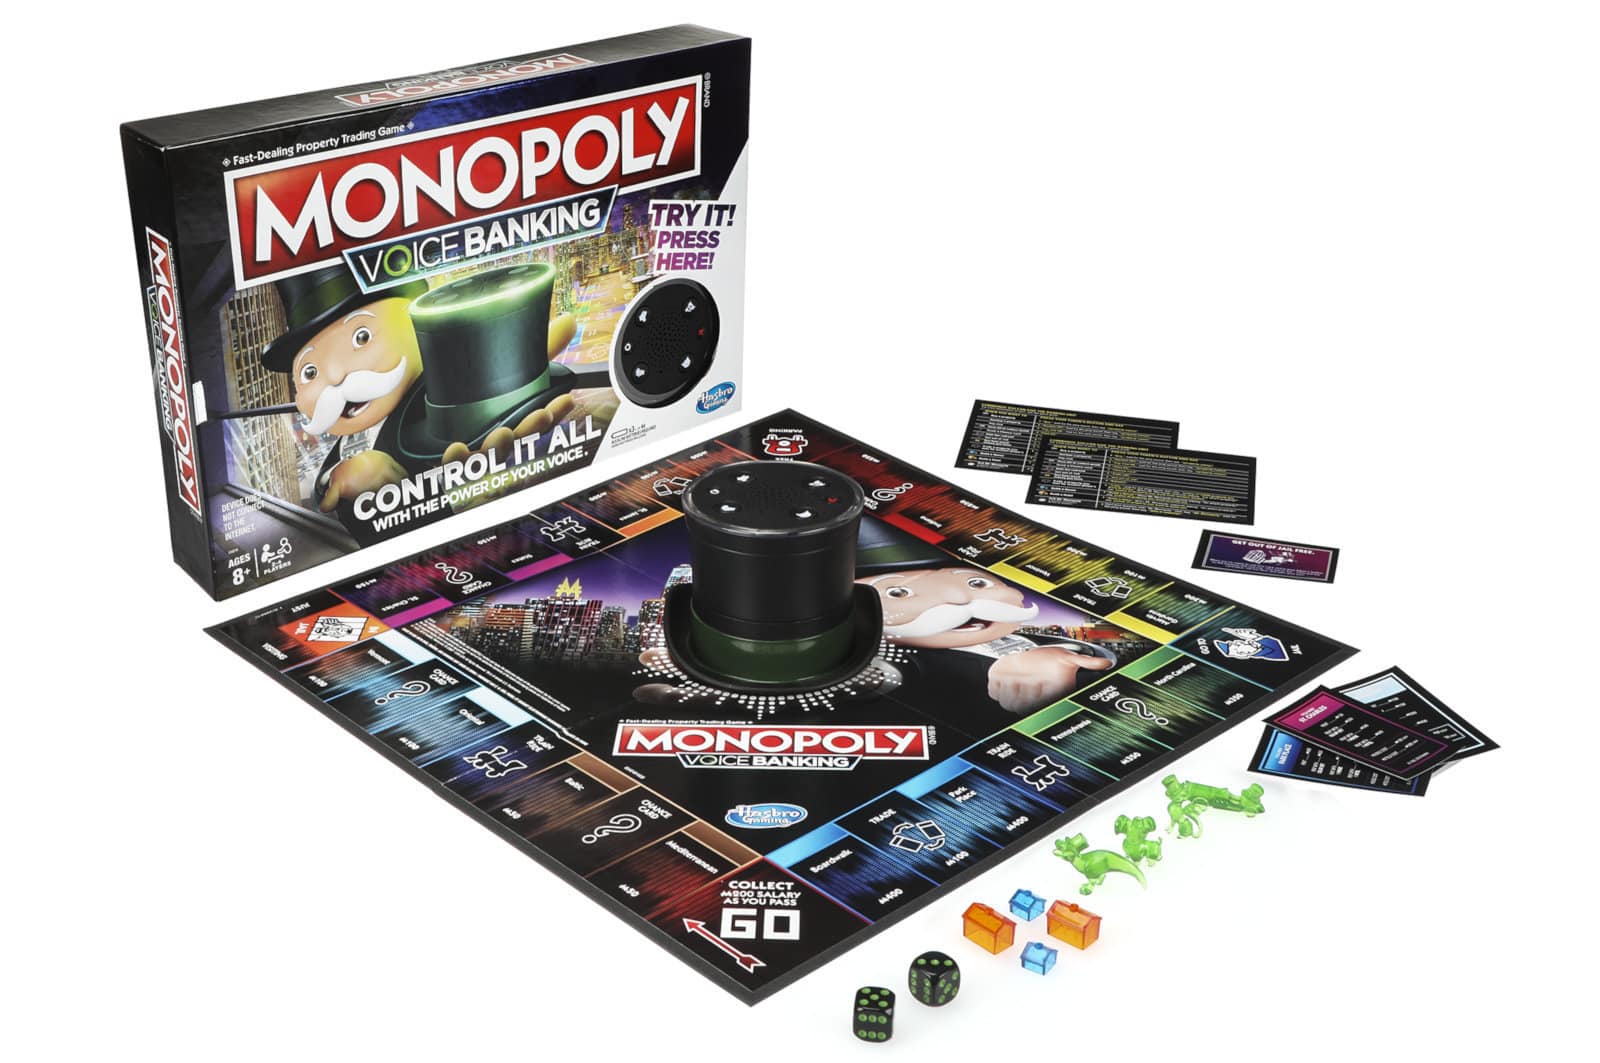 Le prochain jeu Monopoly sera a commandes vocale